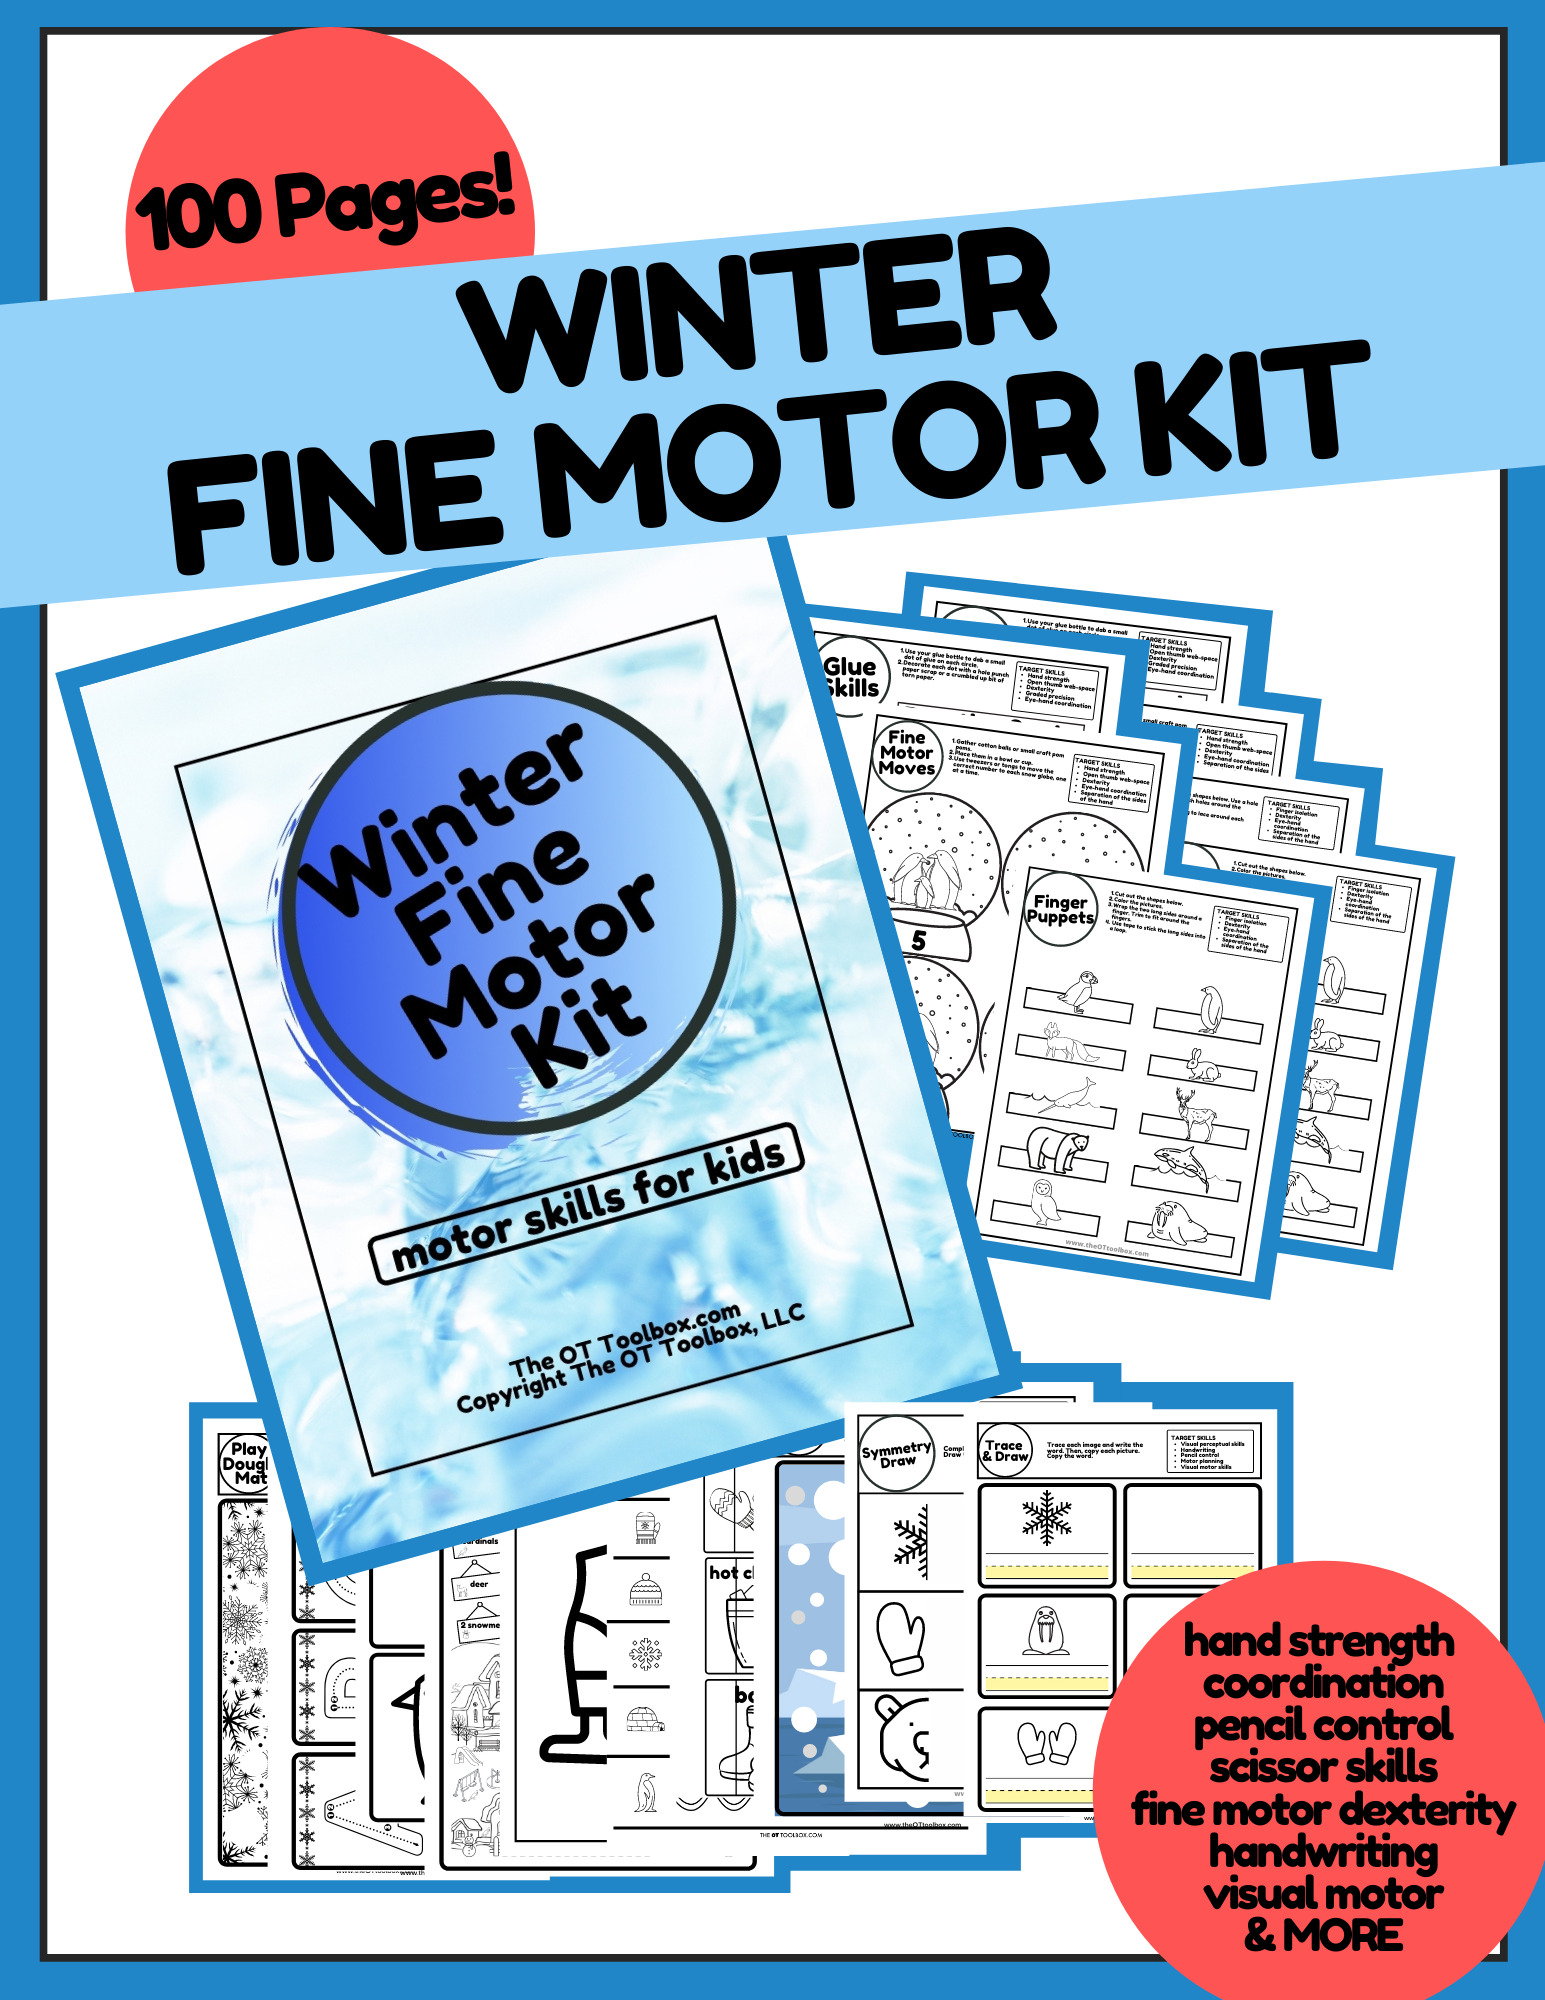 winter fine motor kit